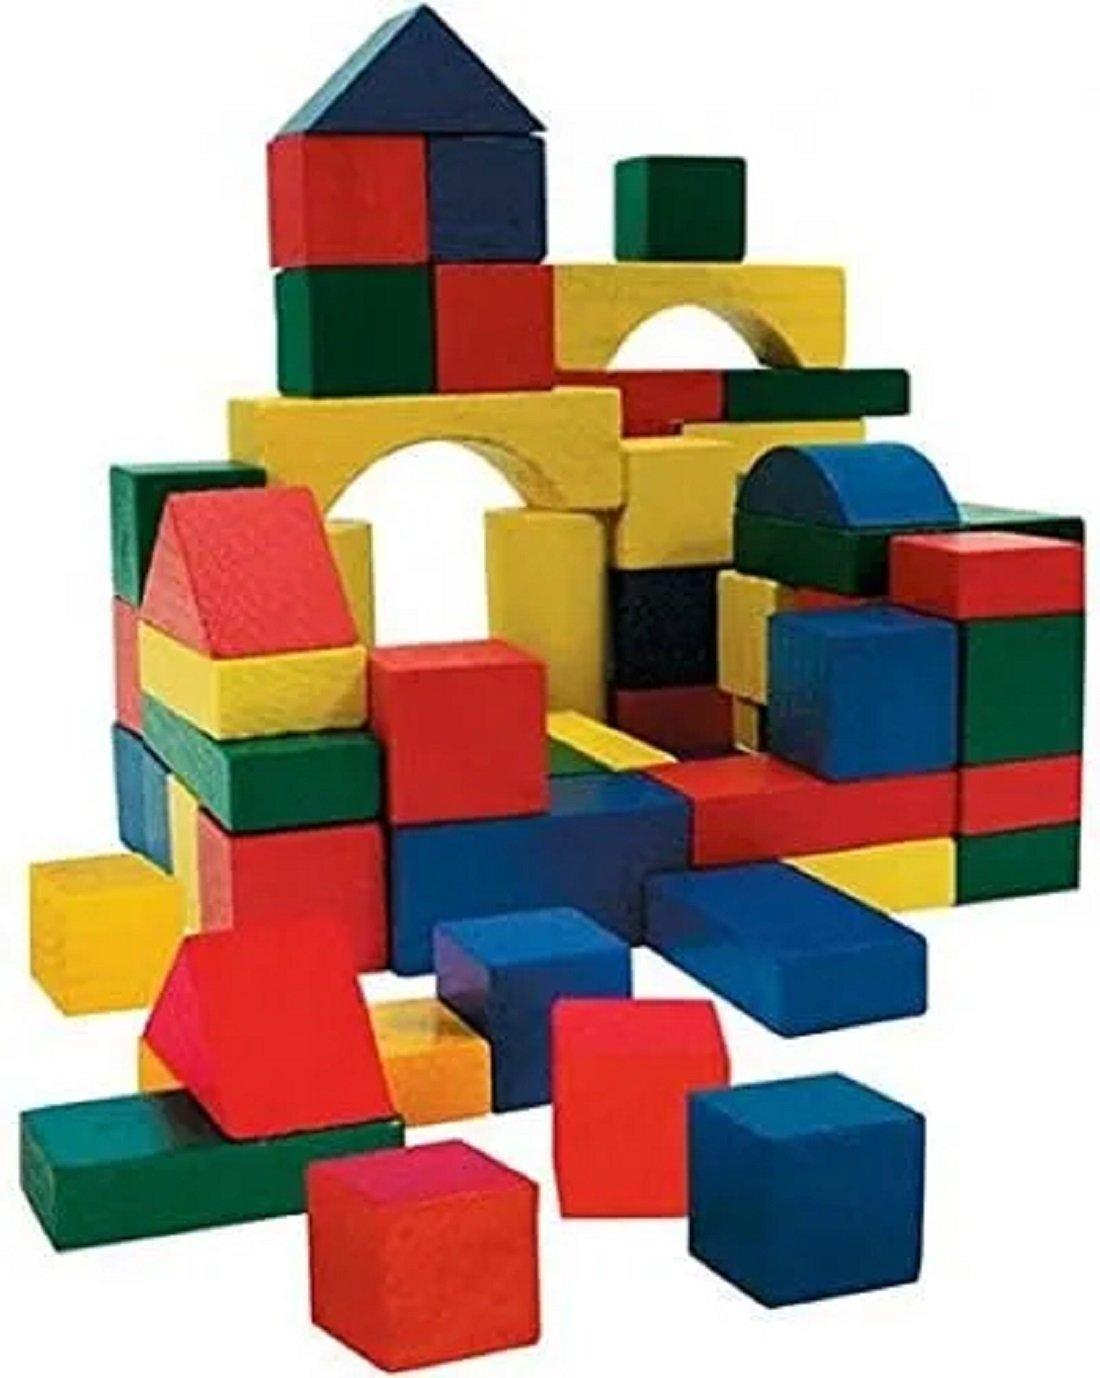 70pcs Wooden Building Blocks for Childrens